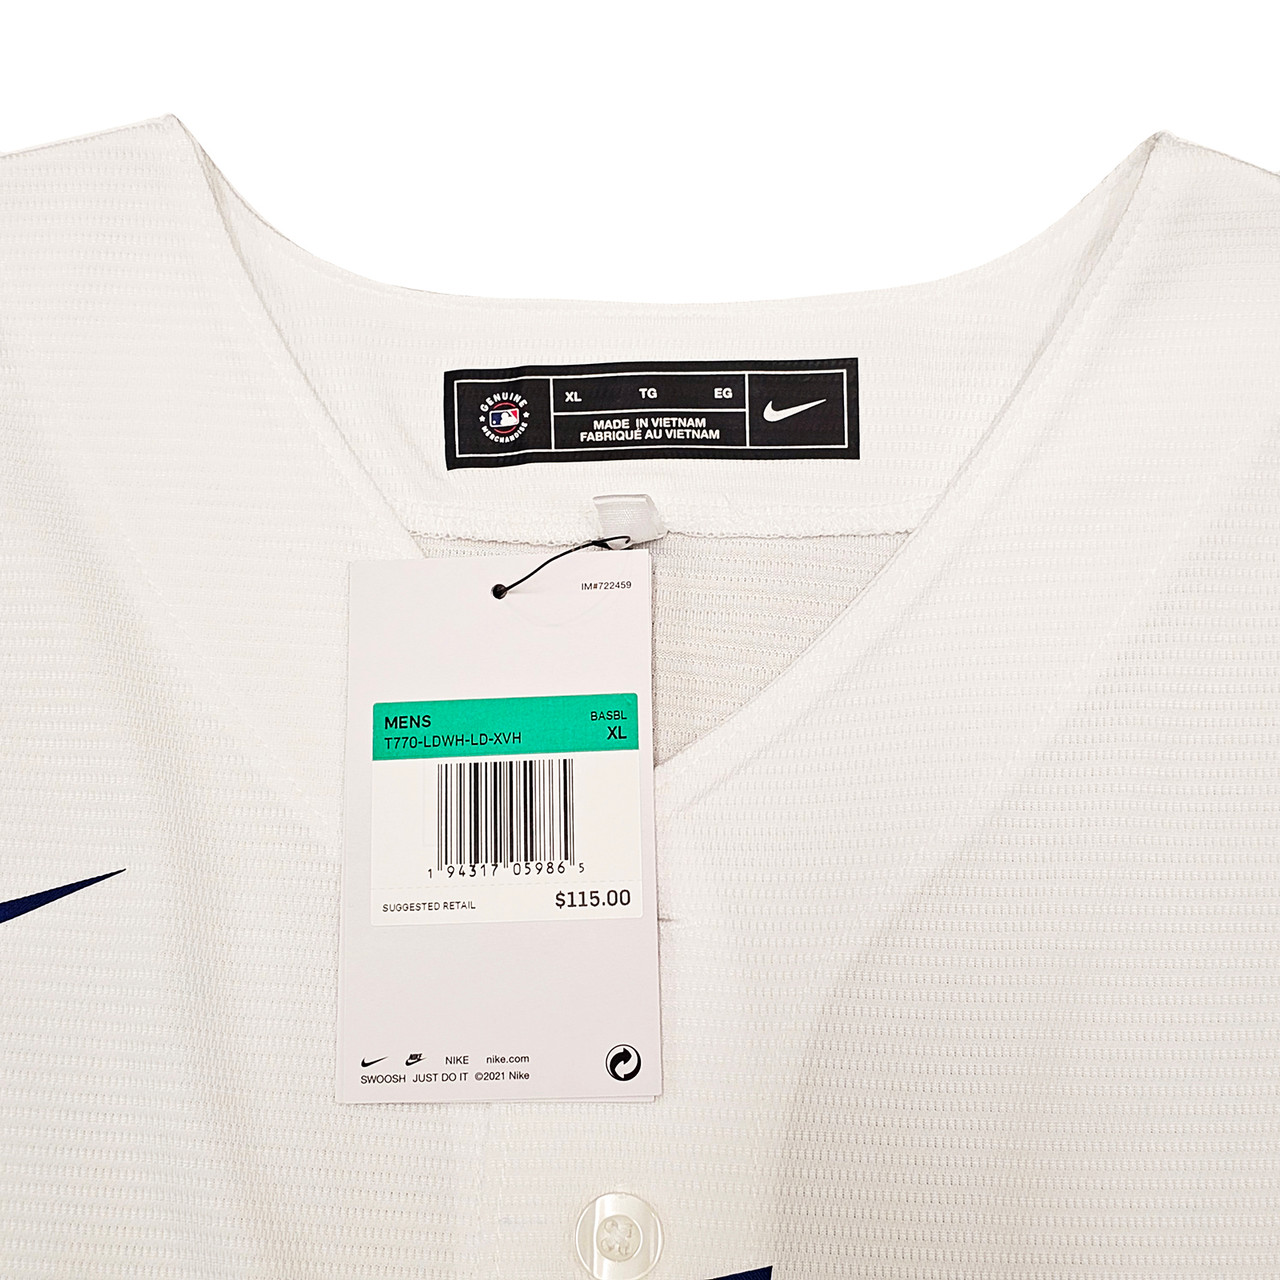 Los Angeles Dodgers Clayton Kershaw Autographed White Nike Jersey Size L  JSA Stock #212240